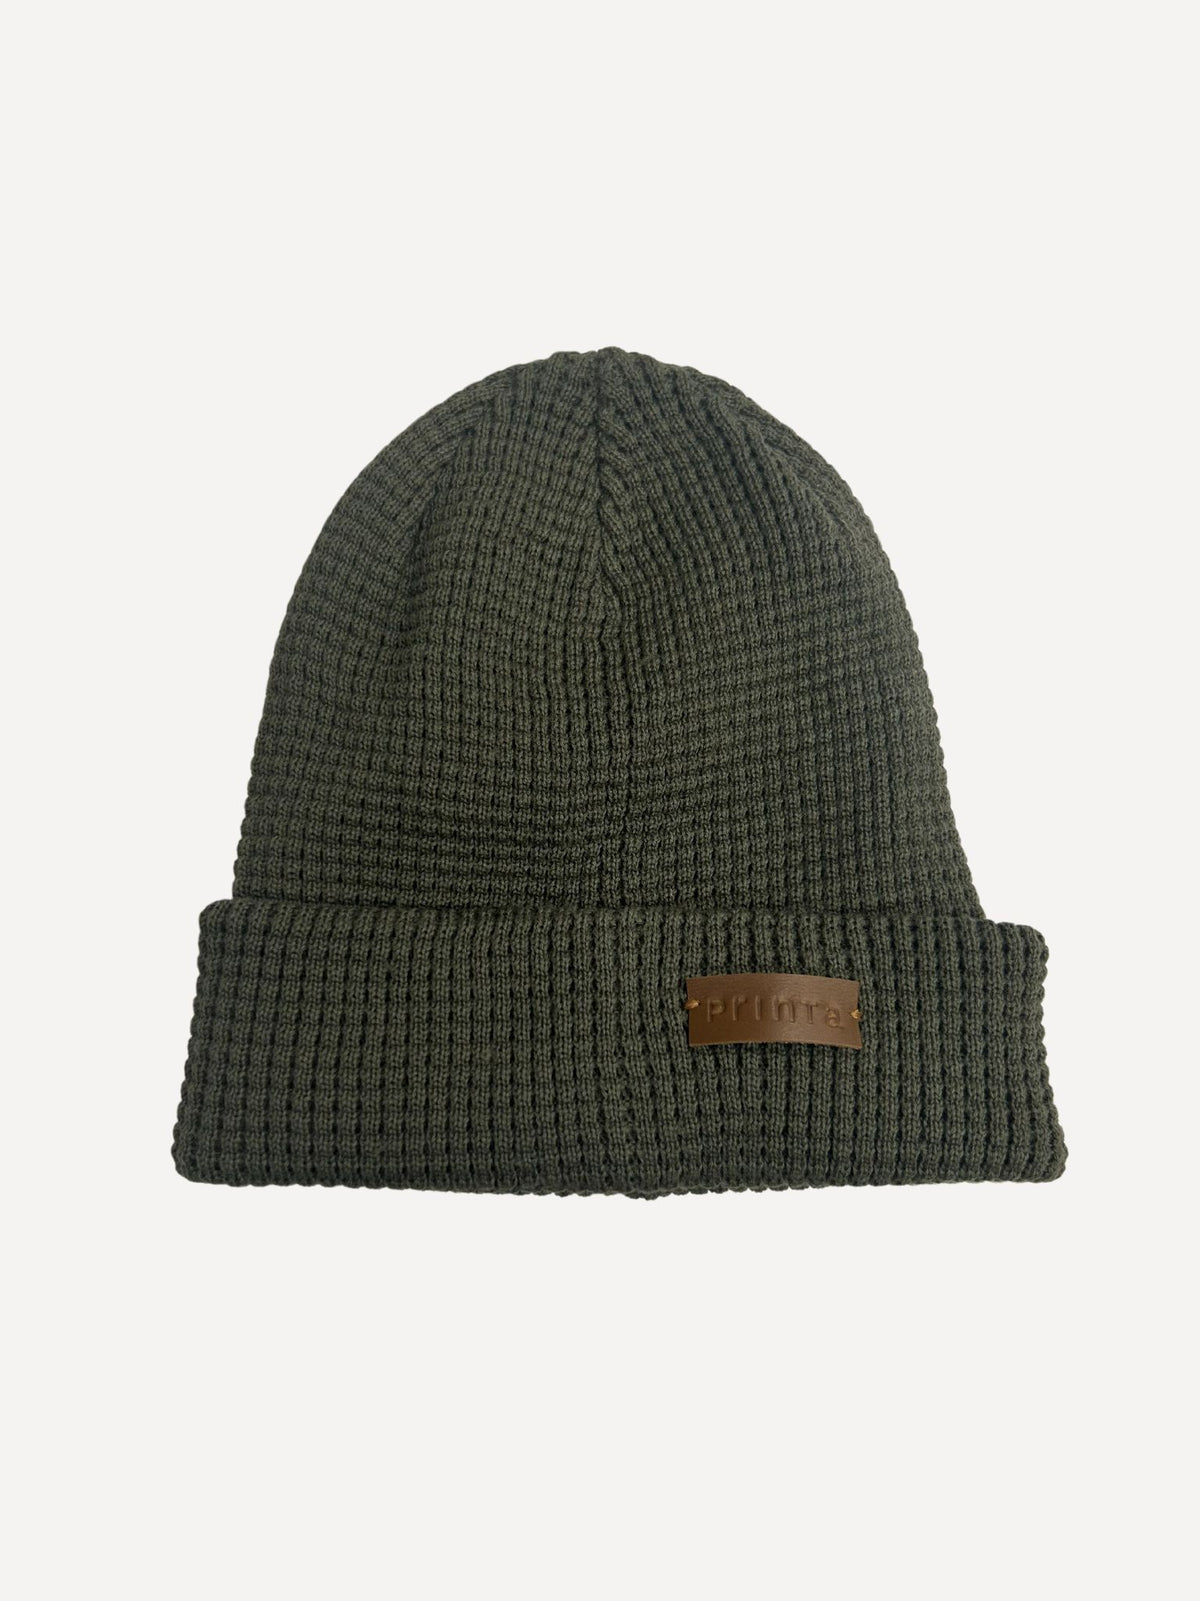 "Printa" green knitted cap